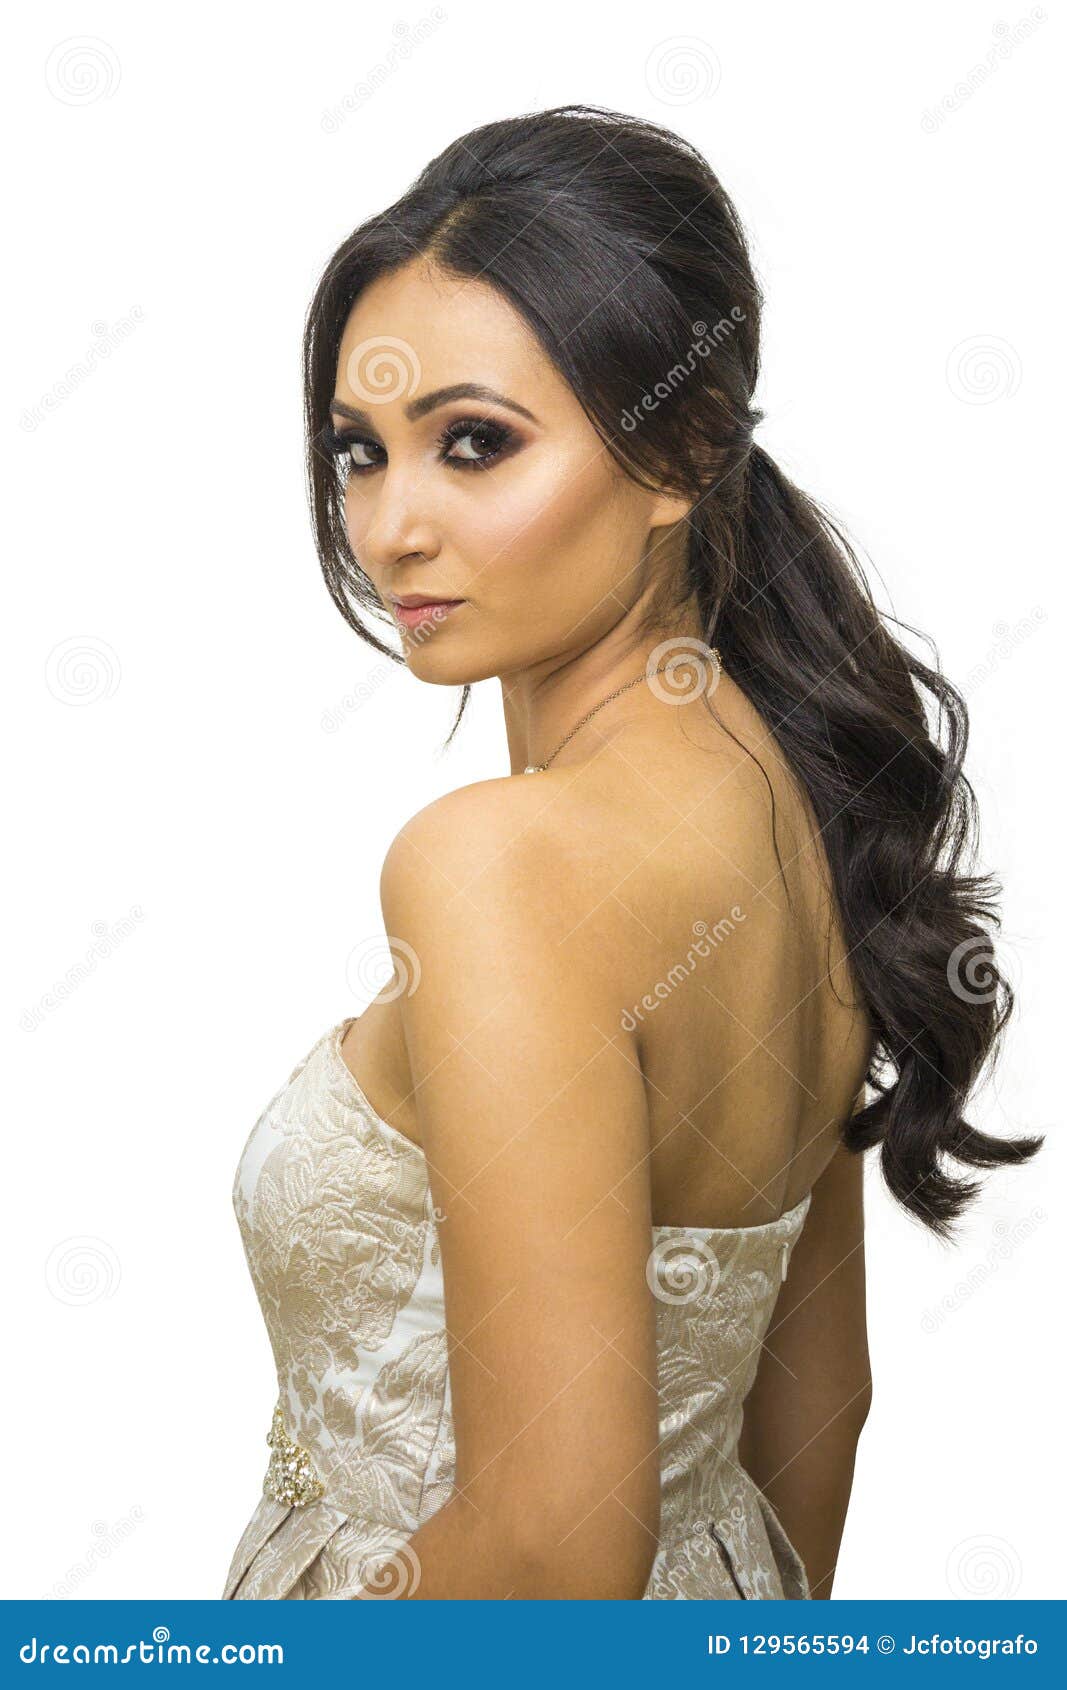 https://thumbs.dreamstime.com/z/beautiful-latin-woman-beautiful-latin-woman-red-lips-perfect-skin-silky-hair-129565594.jpg